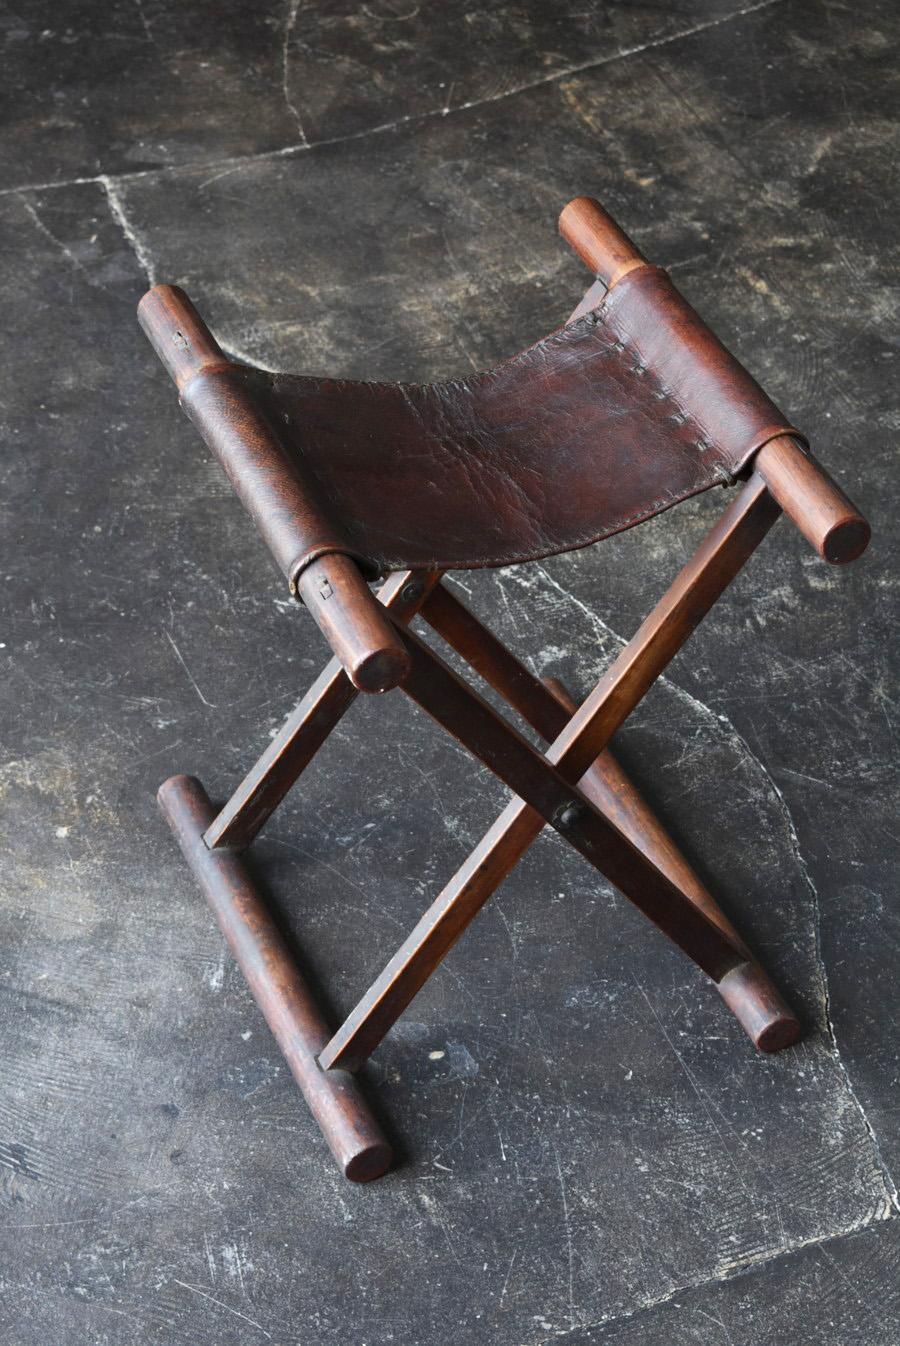 Woodwork Japanese Folding Wooden Antique Chair / 1868-1920 / like Propeller Stool